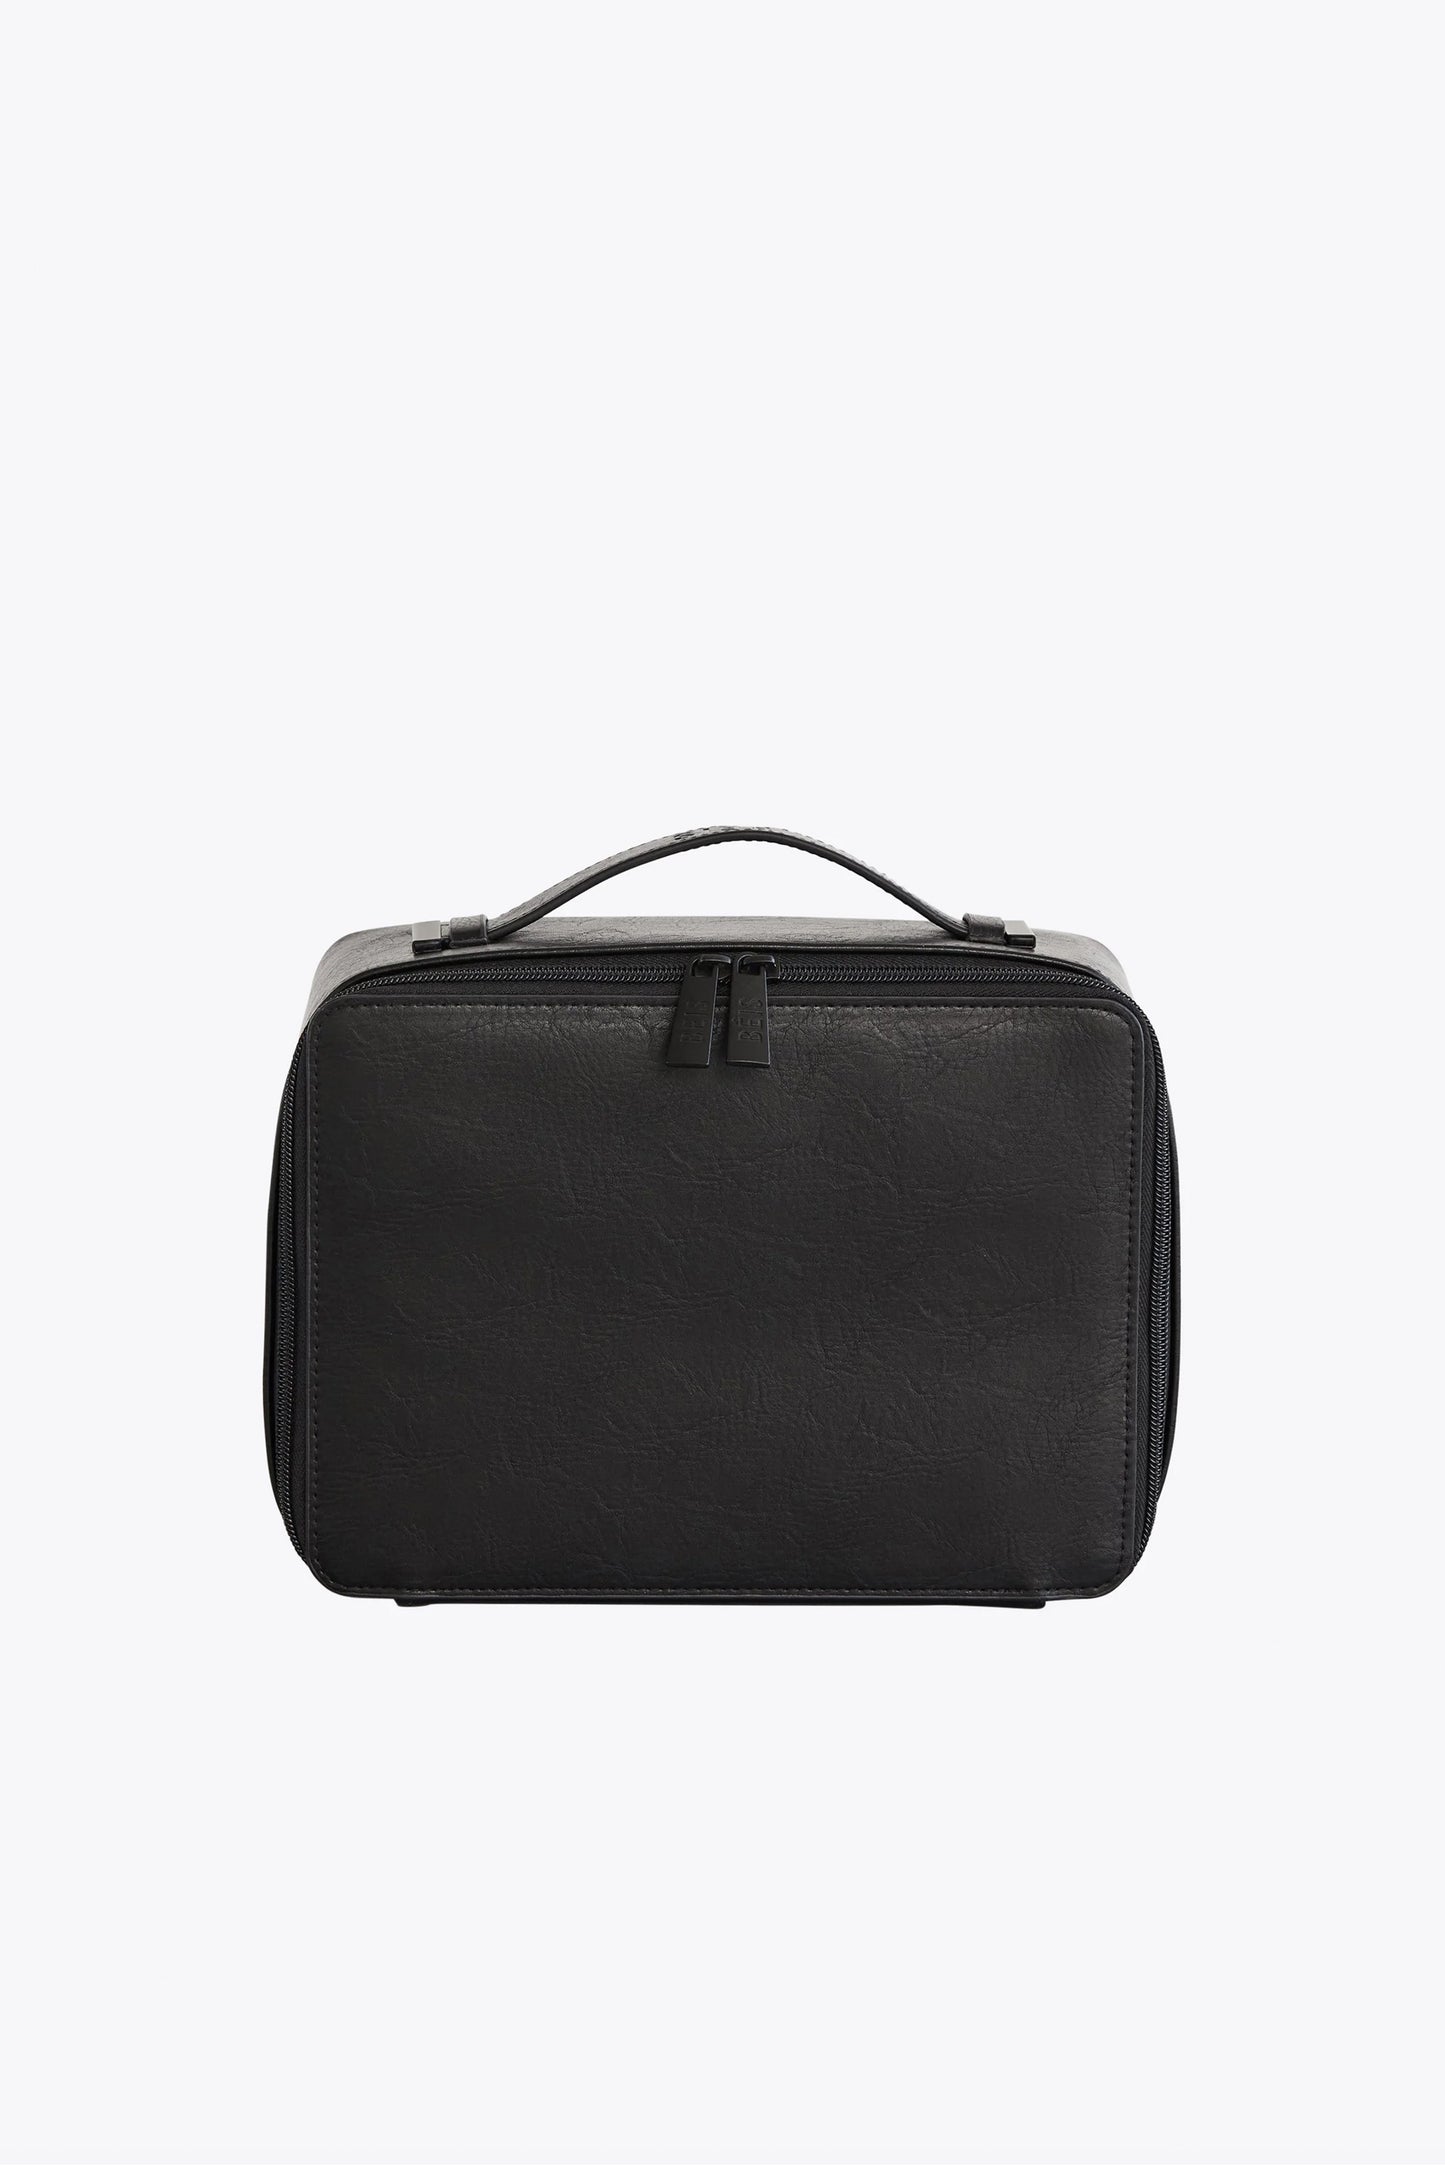 mDesign Long Gift Wrapping Organizer Bag w/ Handles, Zipper - Plaid Black/White